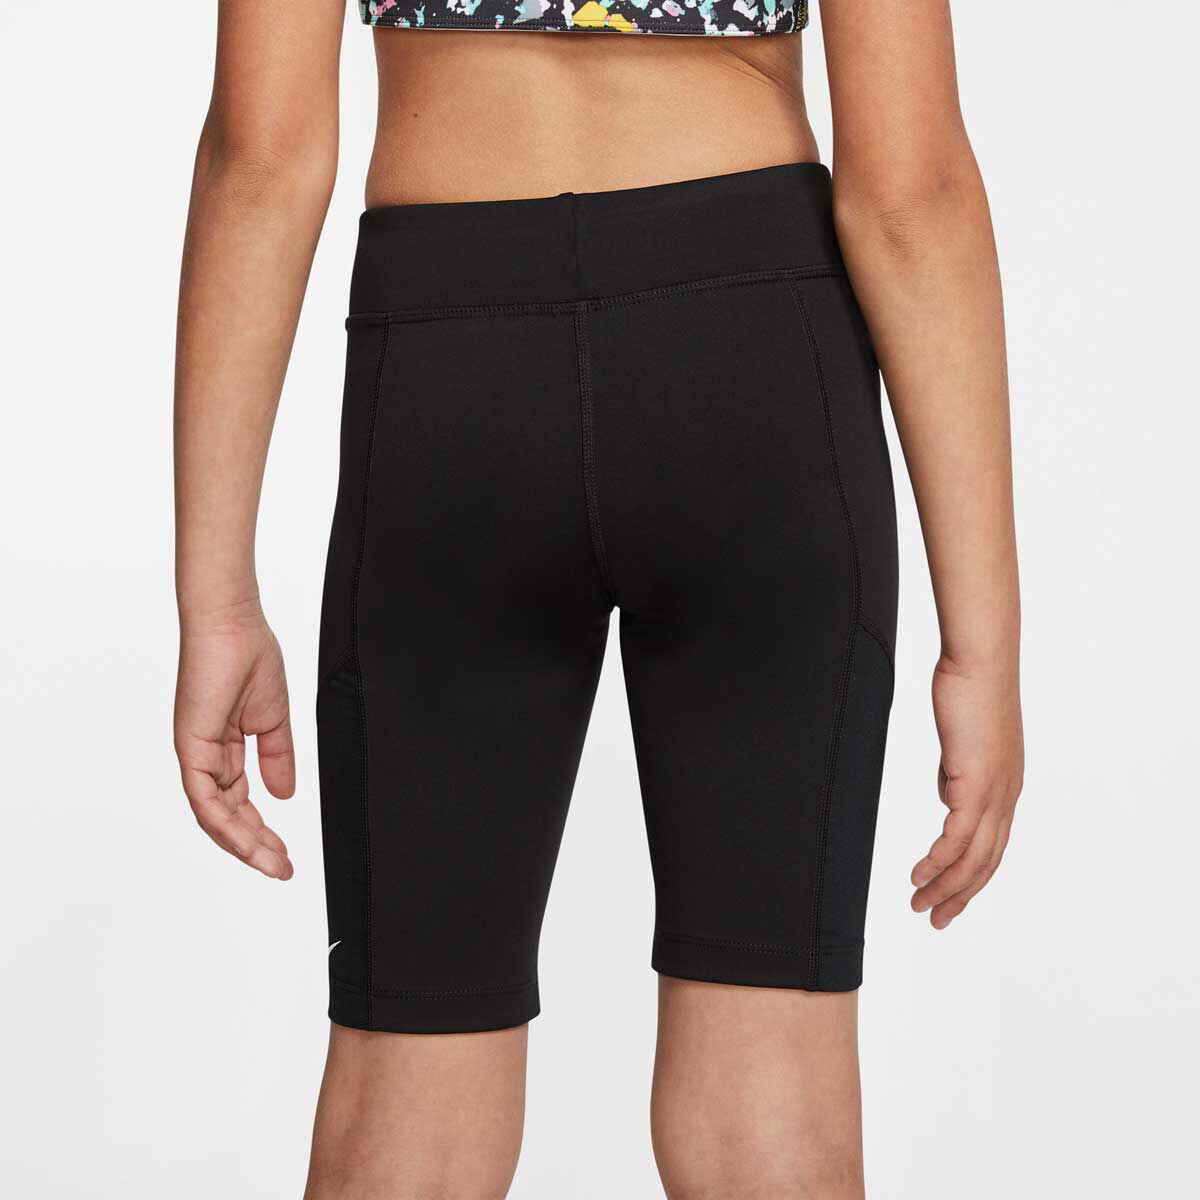 girls black bike shorts